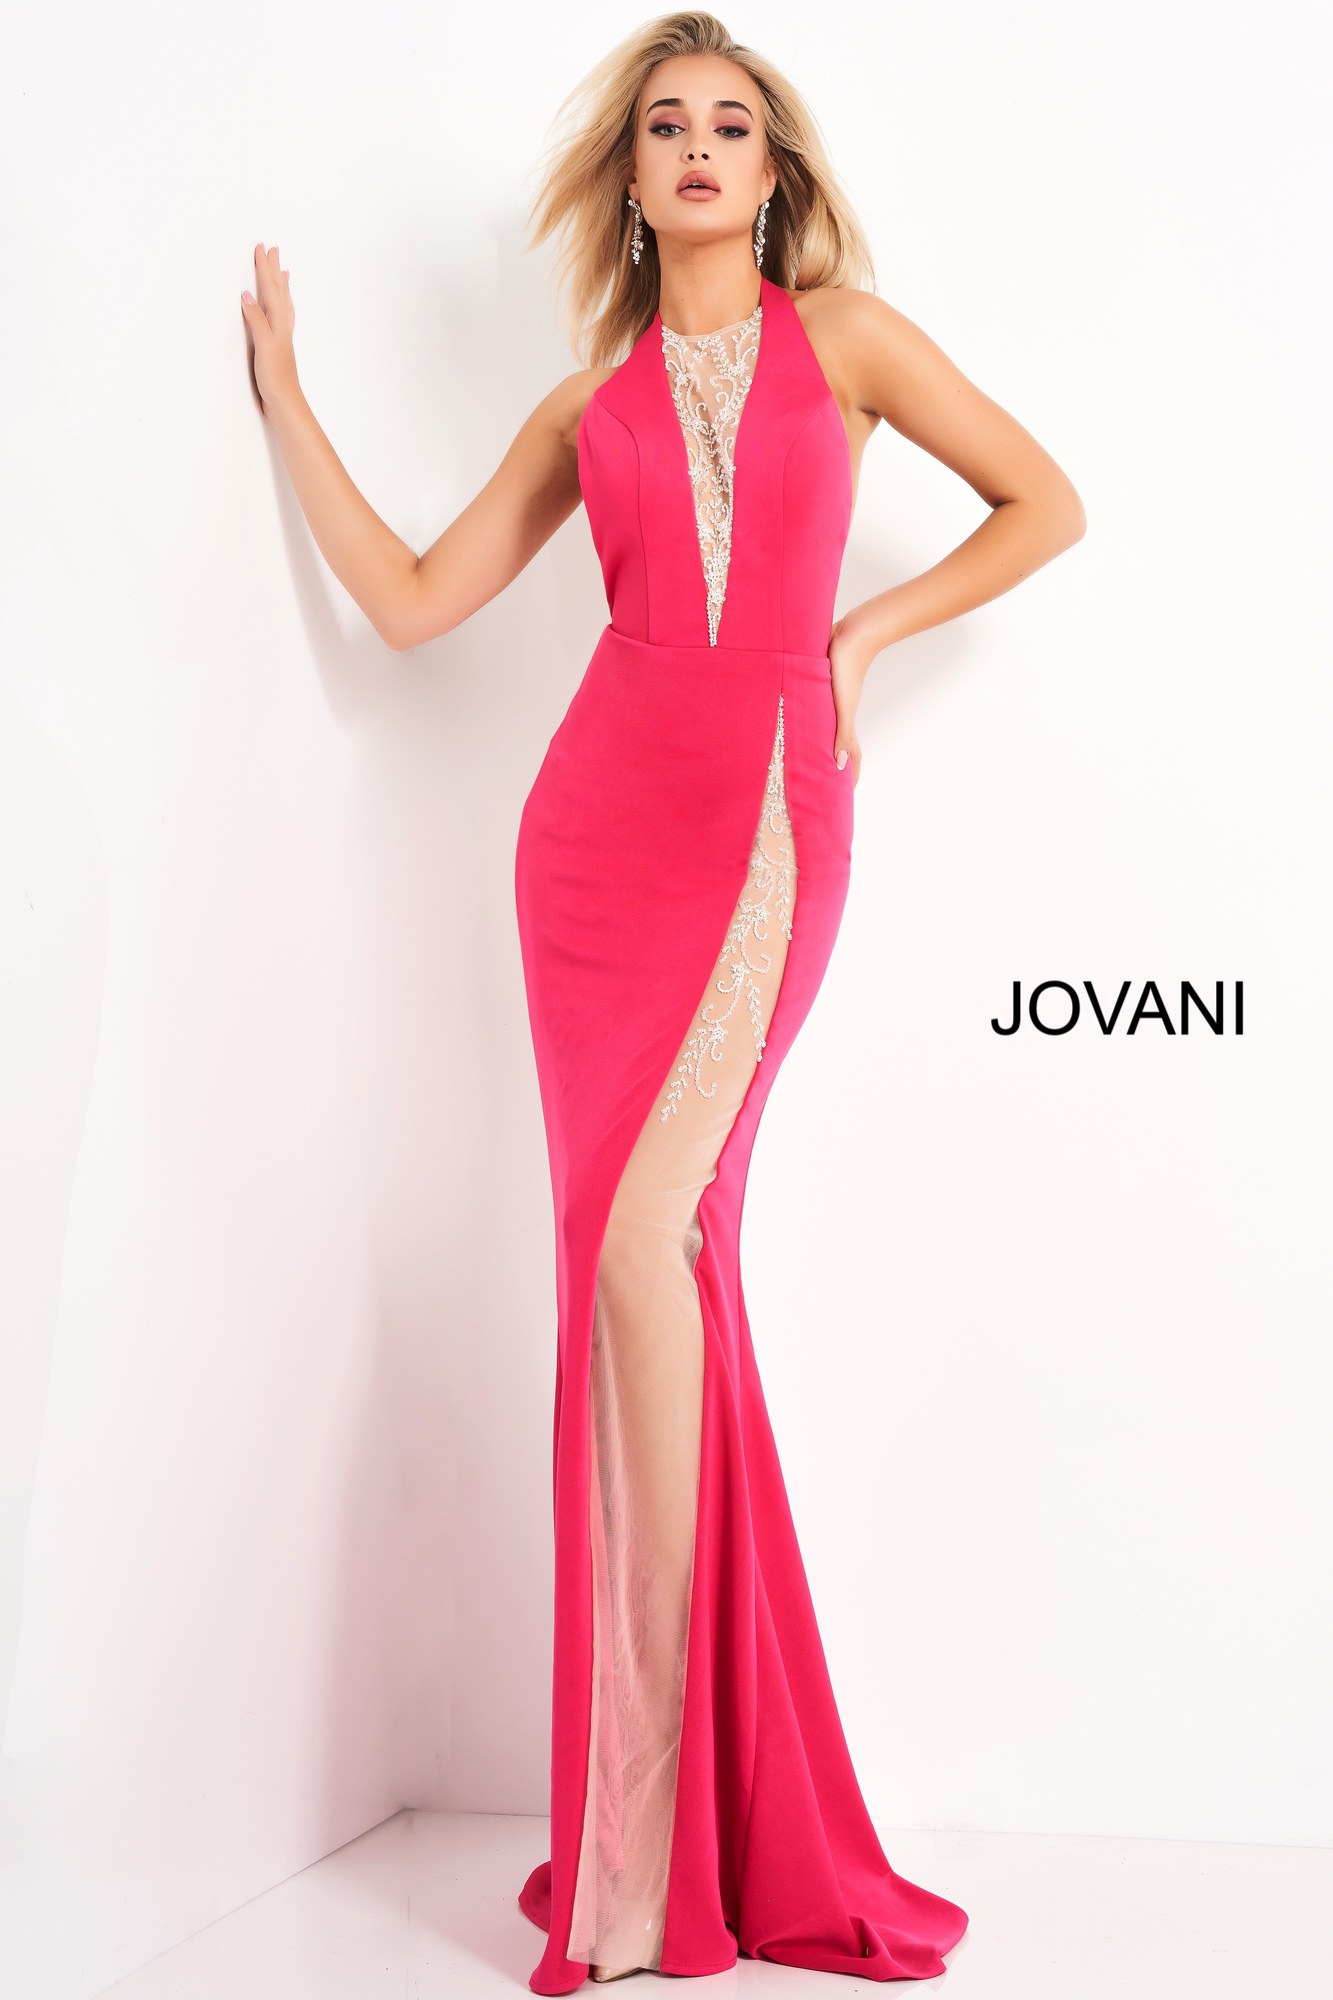 Jovani Hot Pink Halter Neck Backless Prom Dress Free Hot Nude